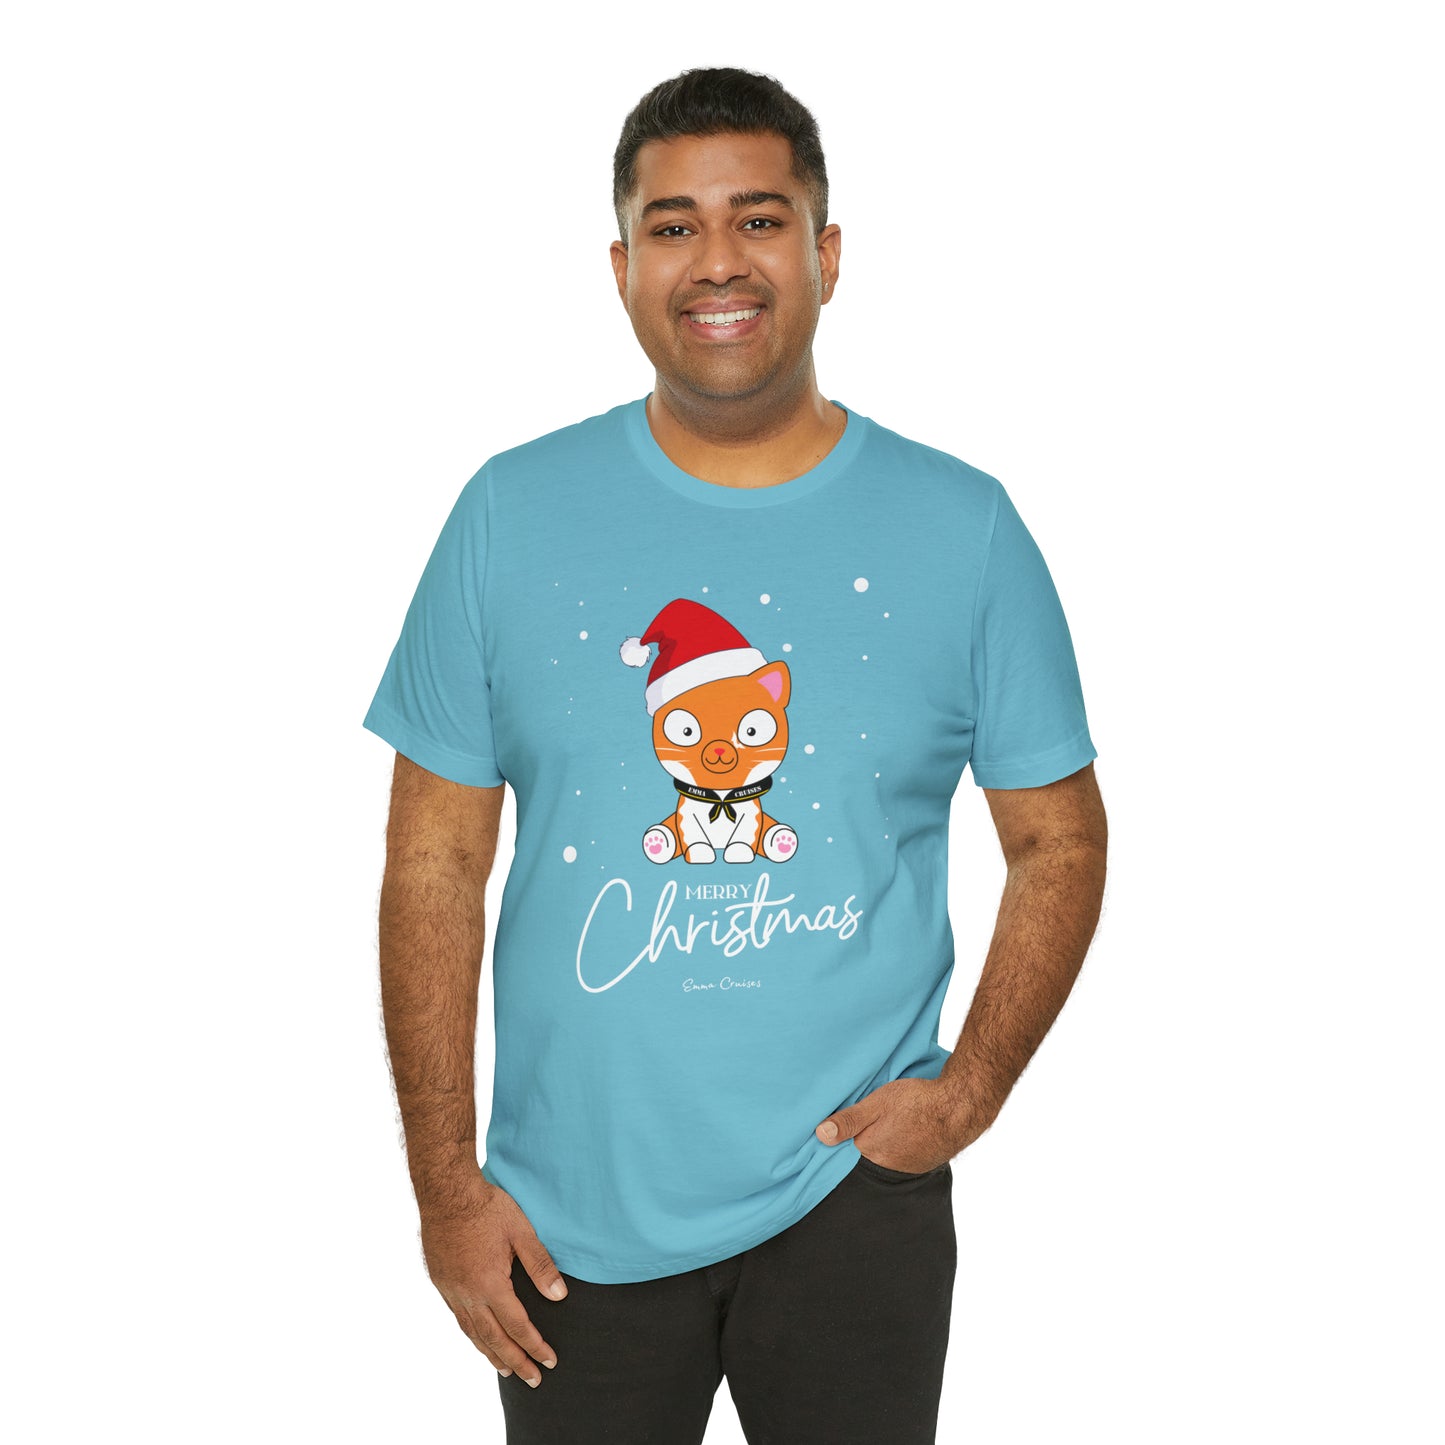 Merry Christmas - UNISEX T-Shirt